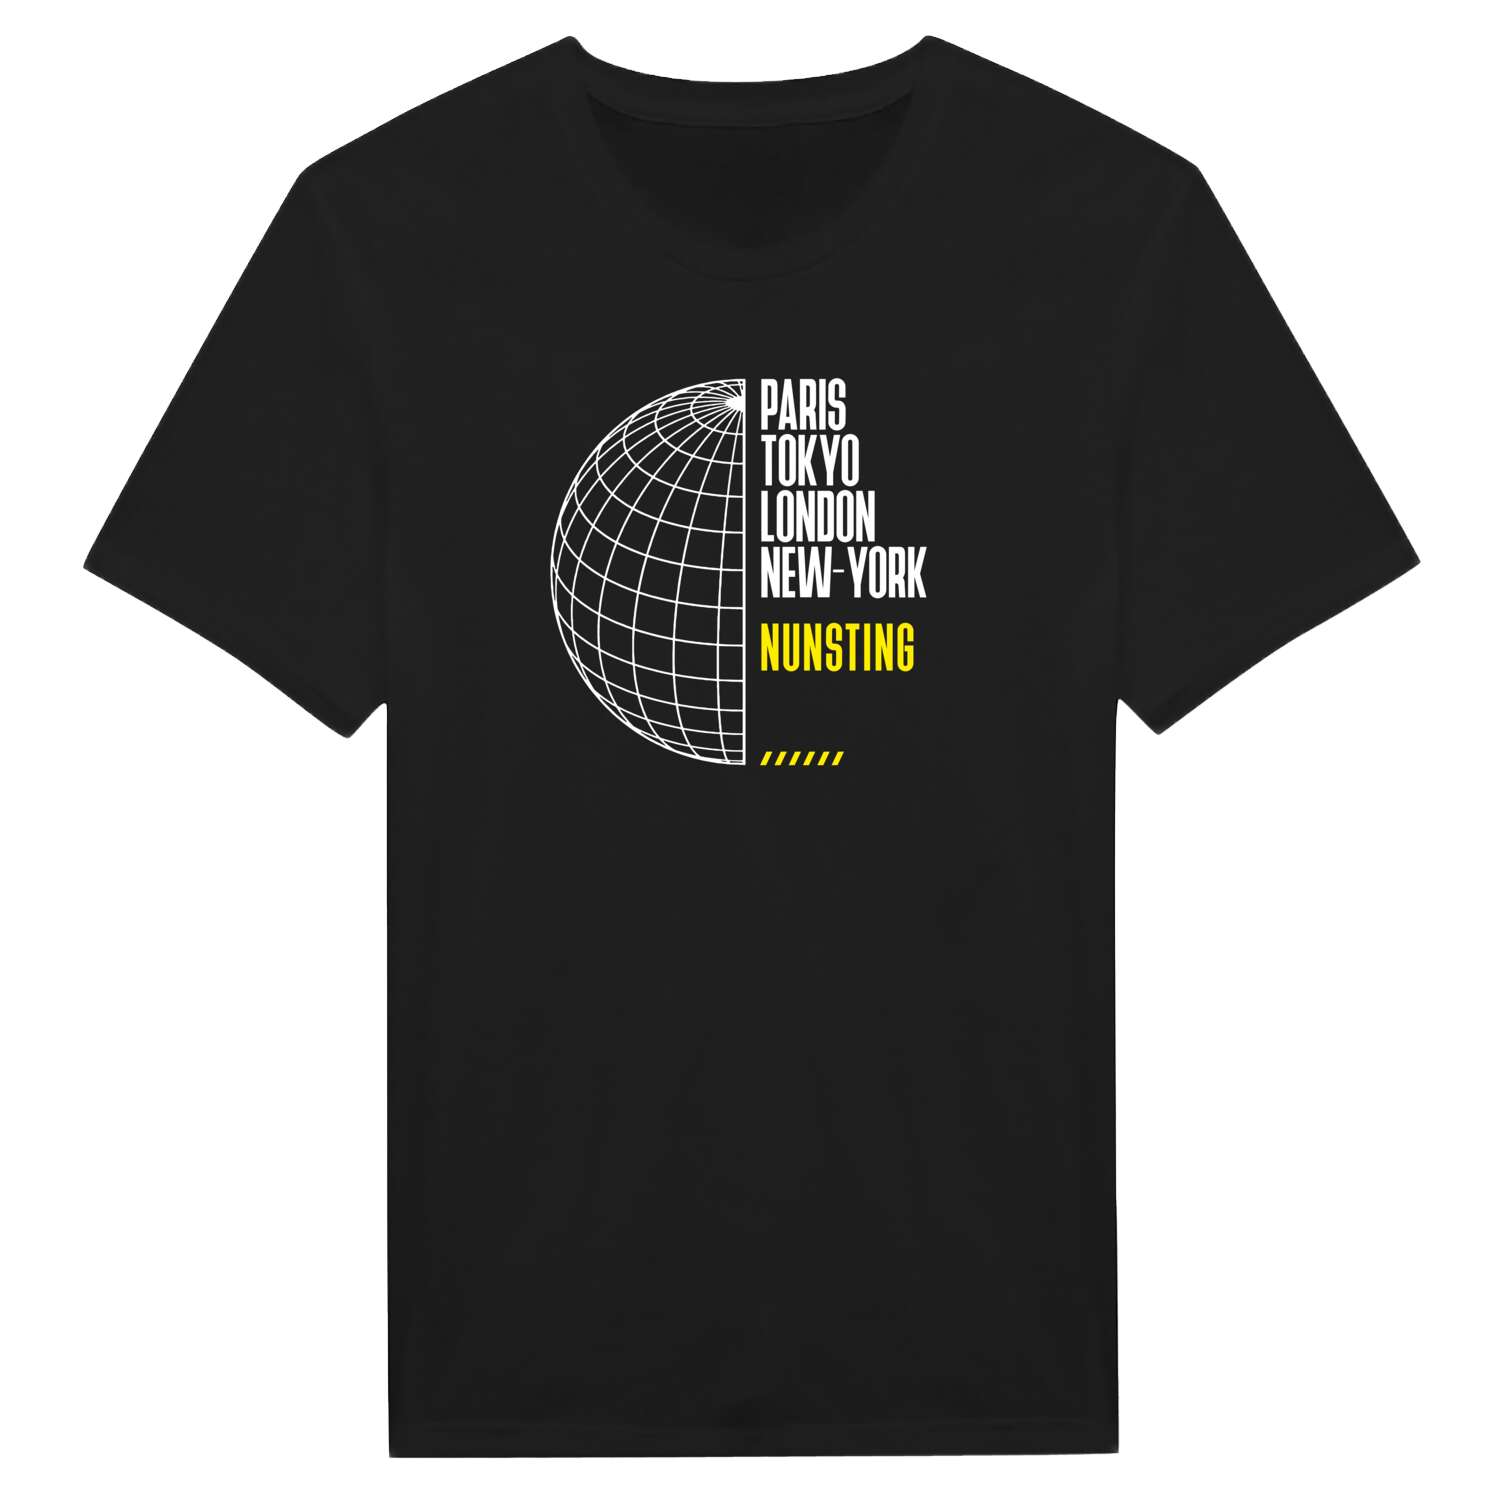 Nunsting T-Shirt »Paris Tokyo London«